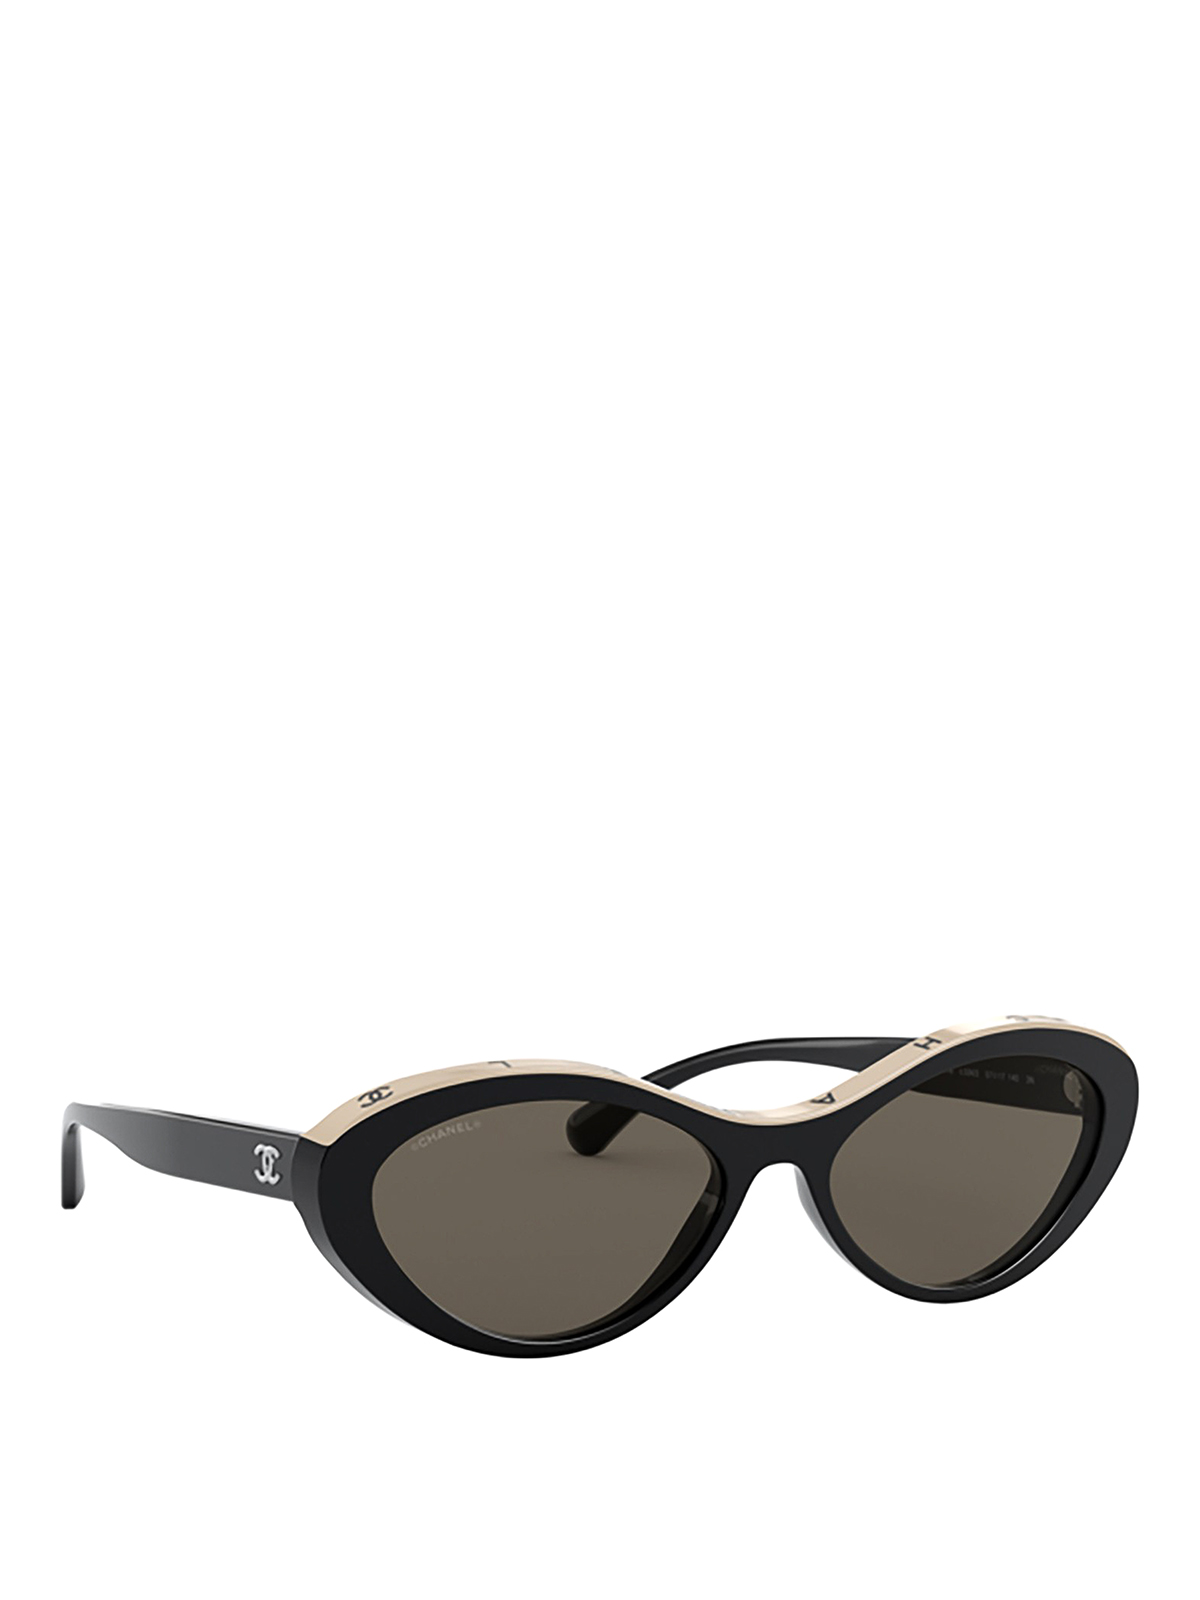 New CHANEL CH 6039 501/S6 59mm Black Cat Eye Sunglasses Italy